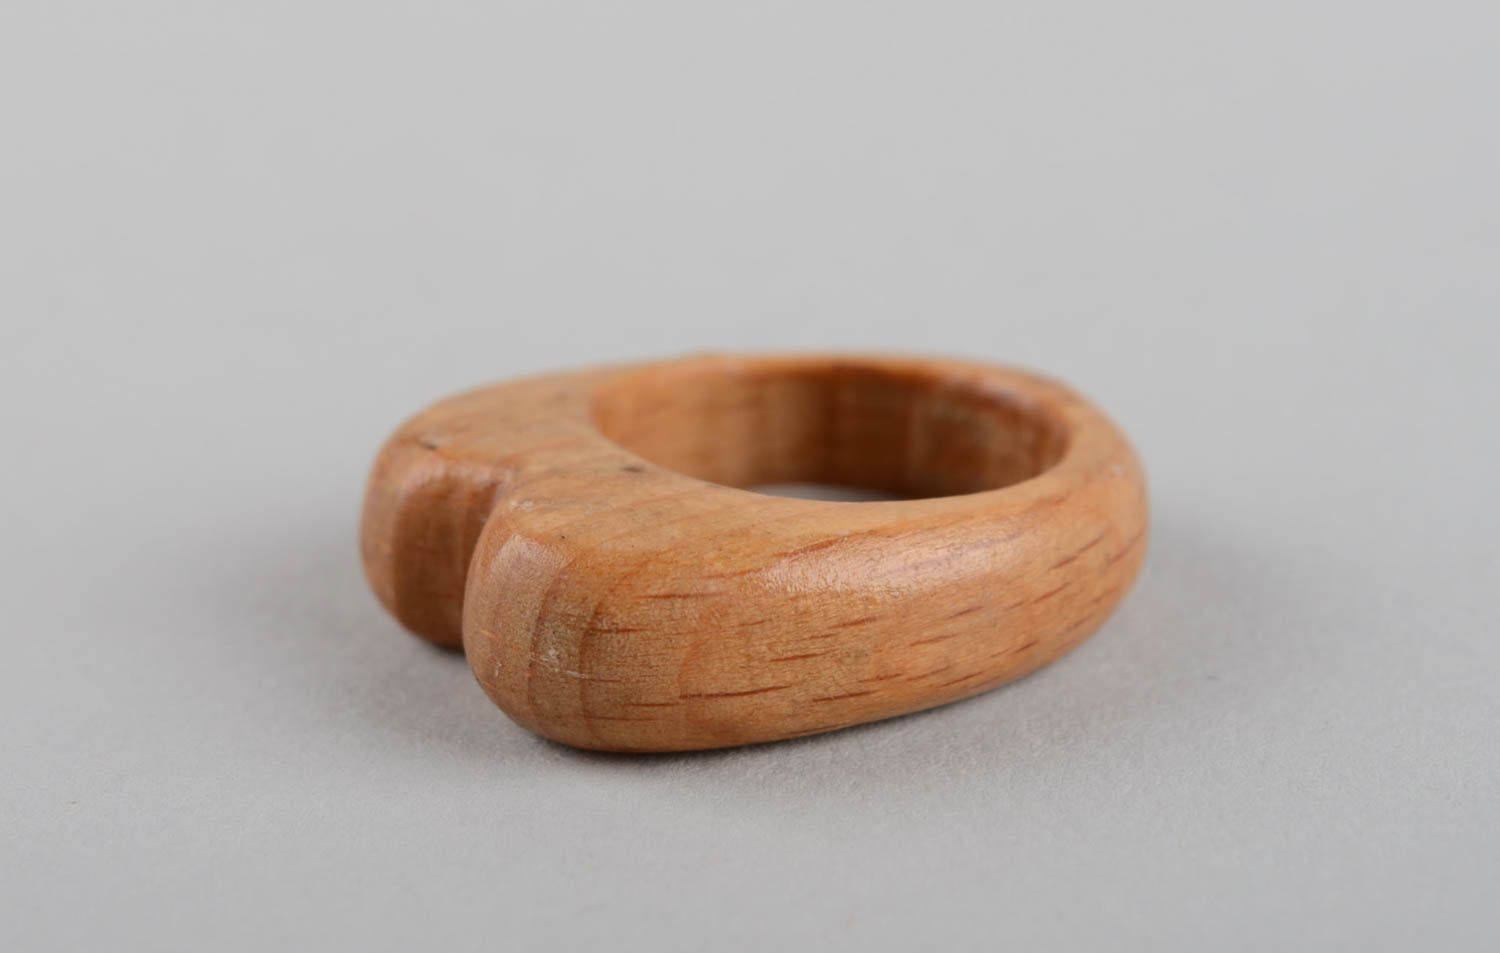 Cute handmade wooden ring wooden jewelry artisan jewelry designs wood craft photo 9